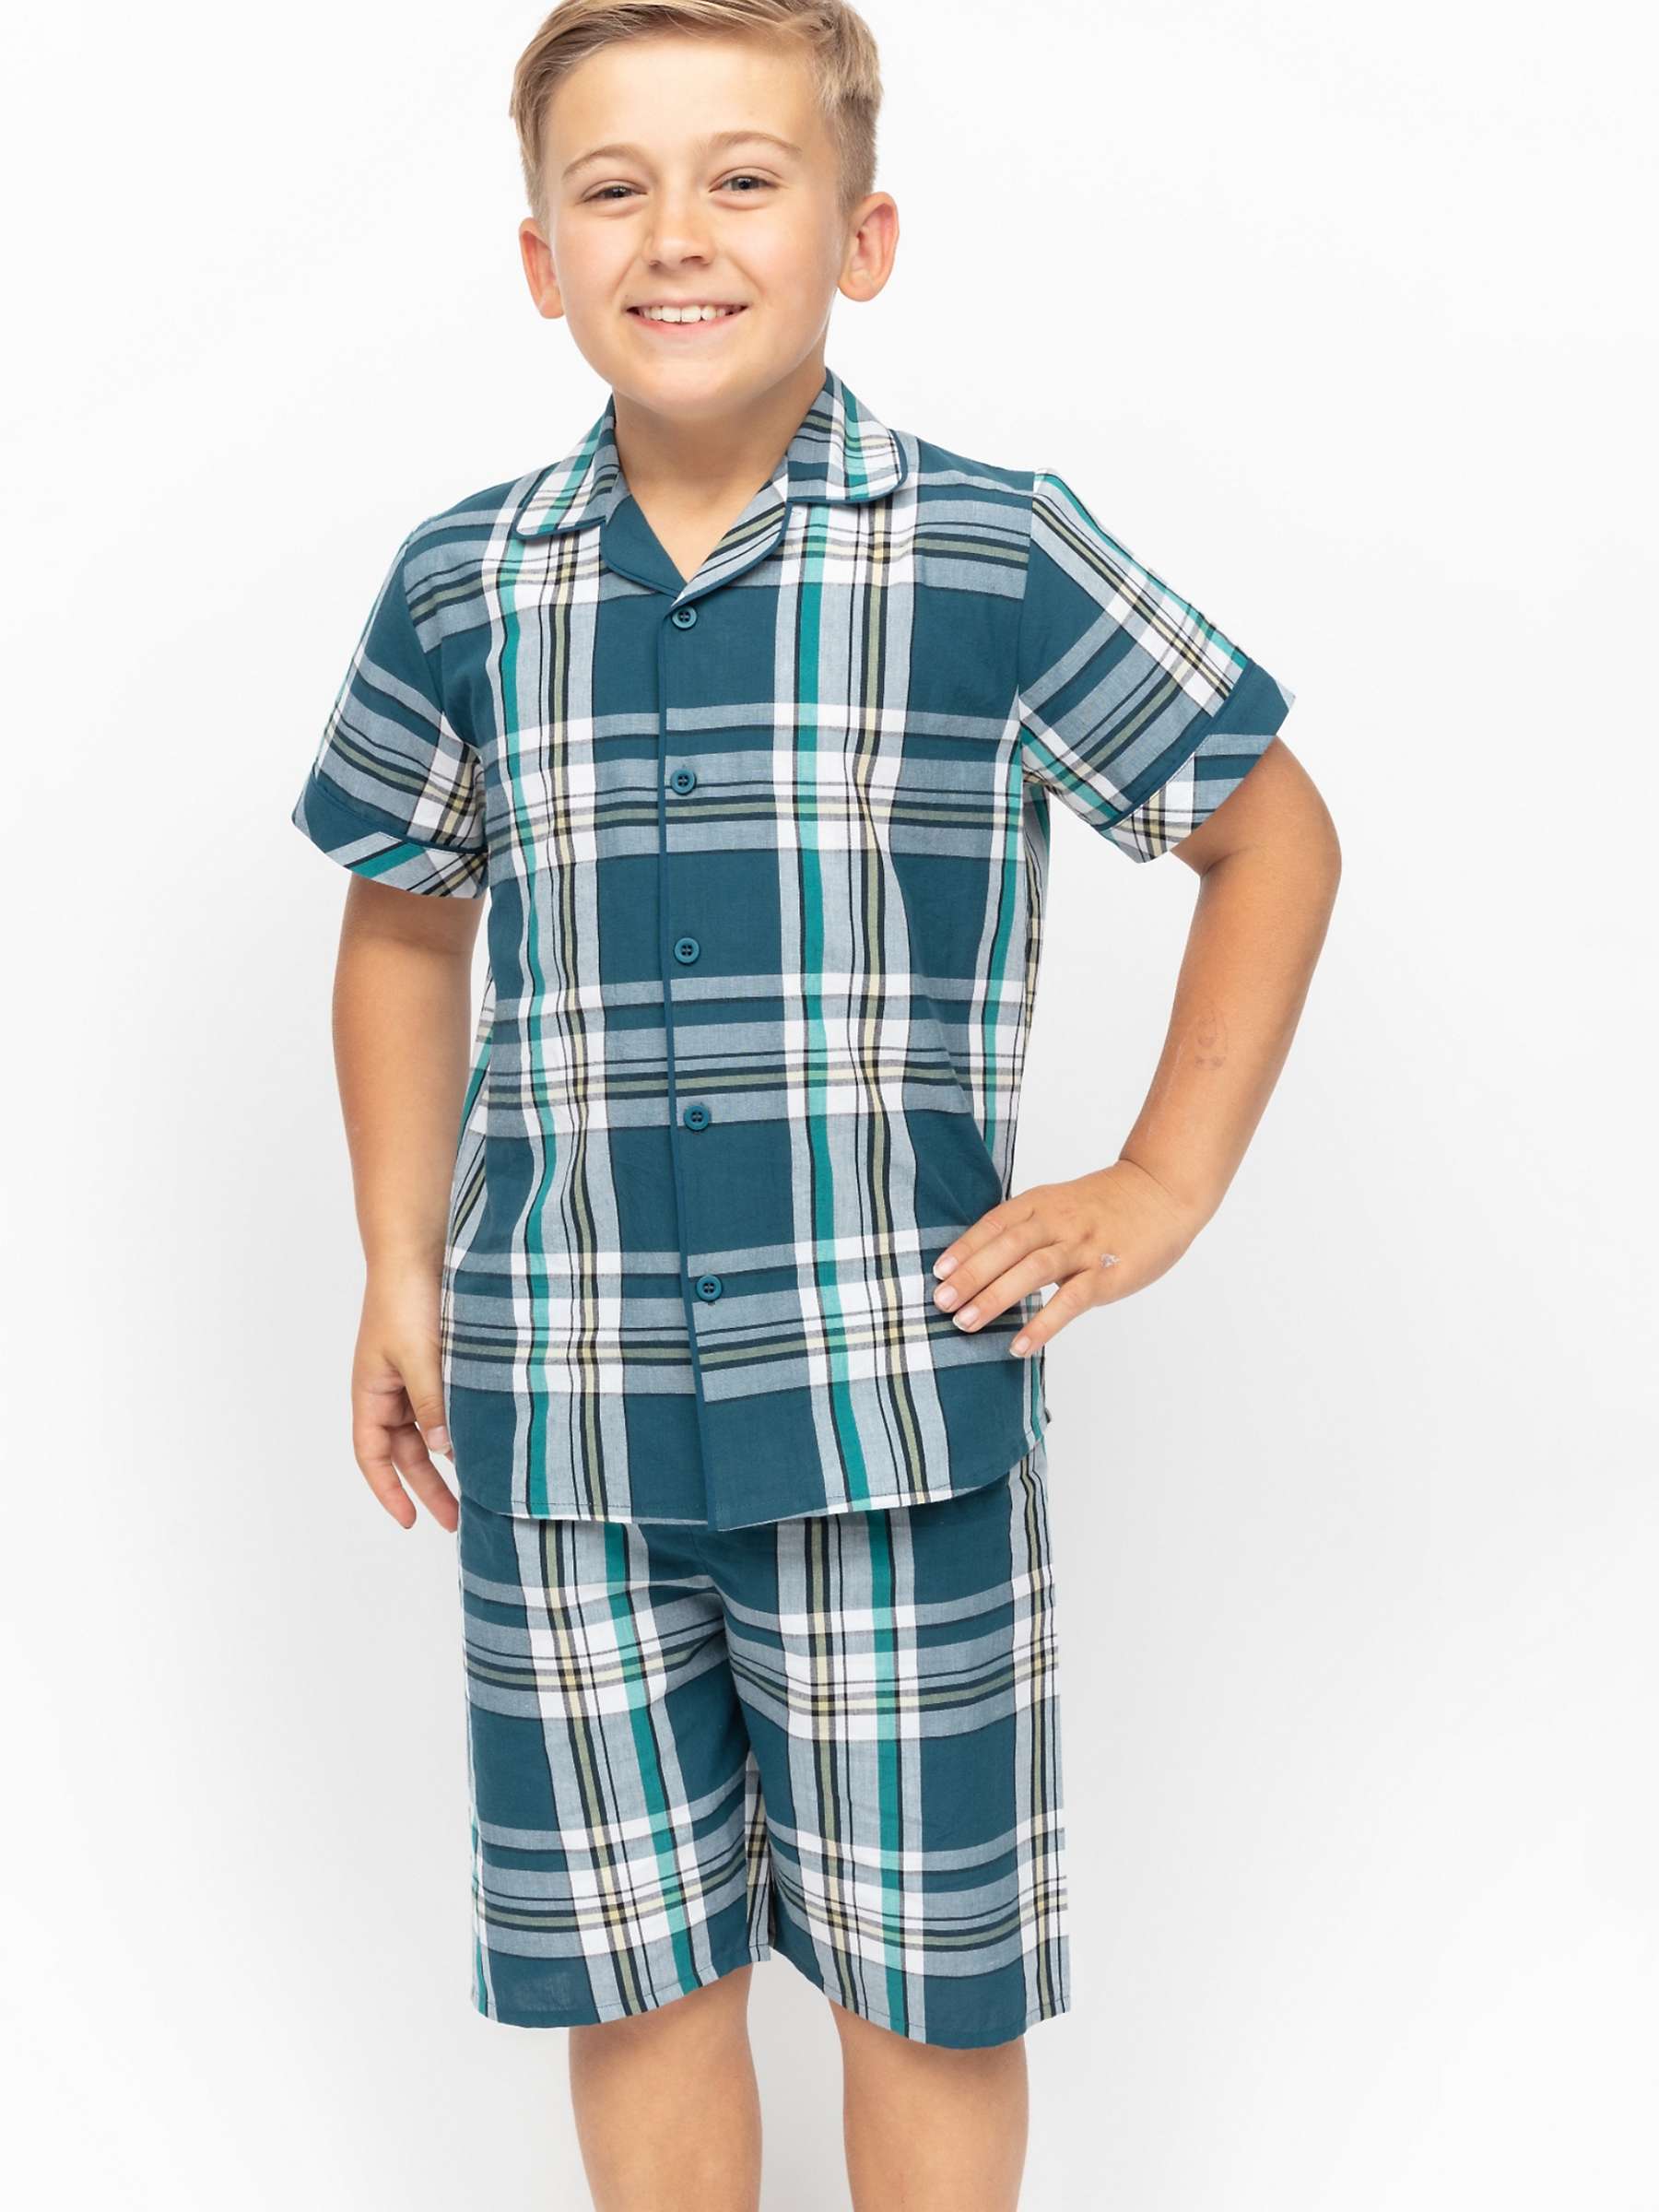 Buy Minijammies Kids' Cove Check Shorty Pyjamas Set, Teal Online at johnlewis.com